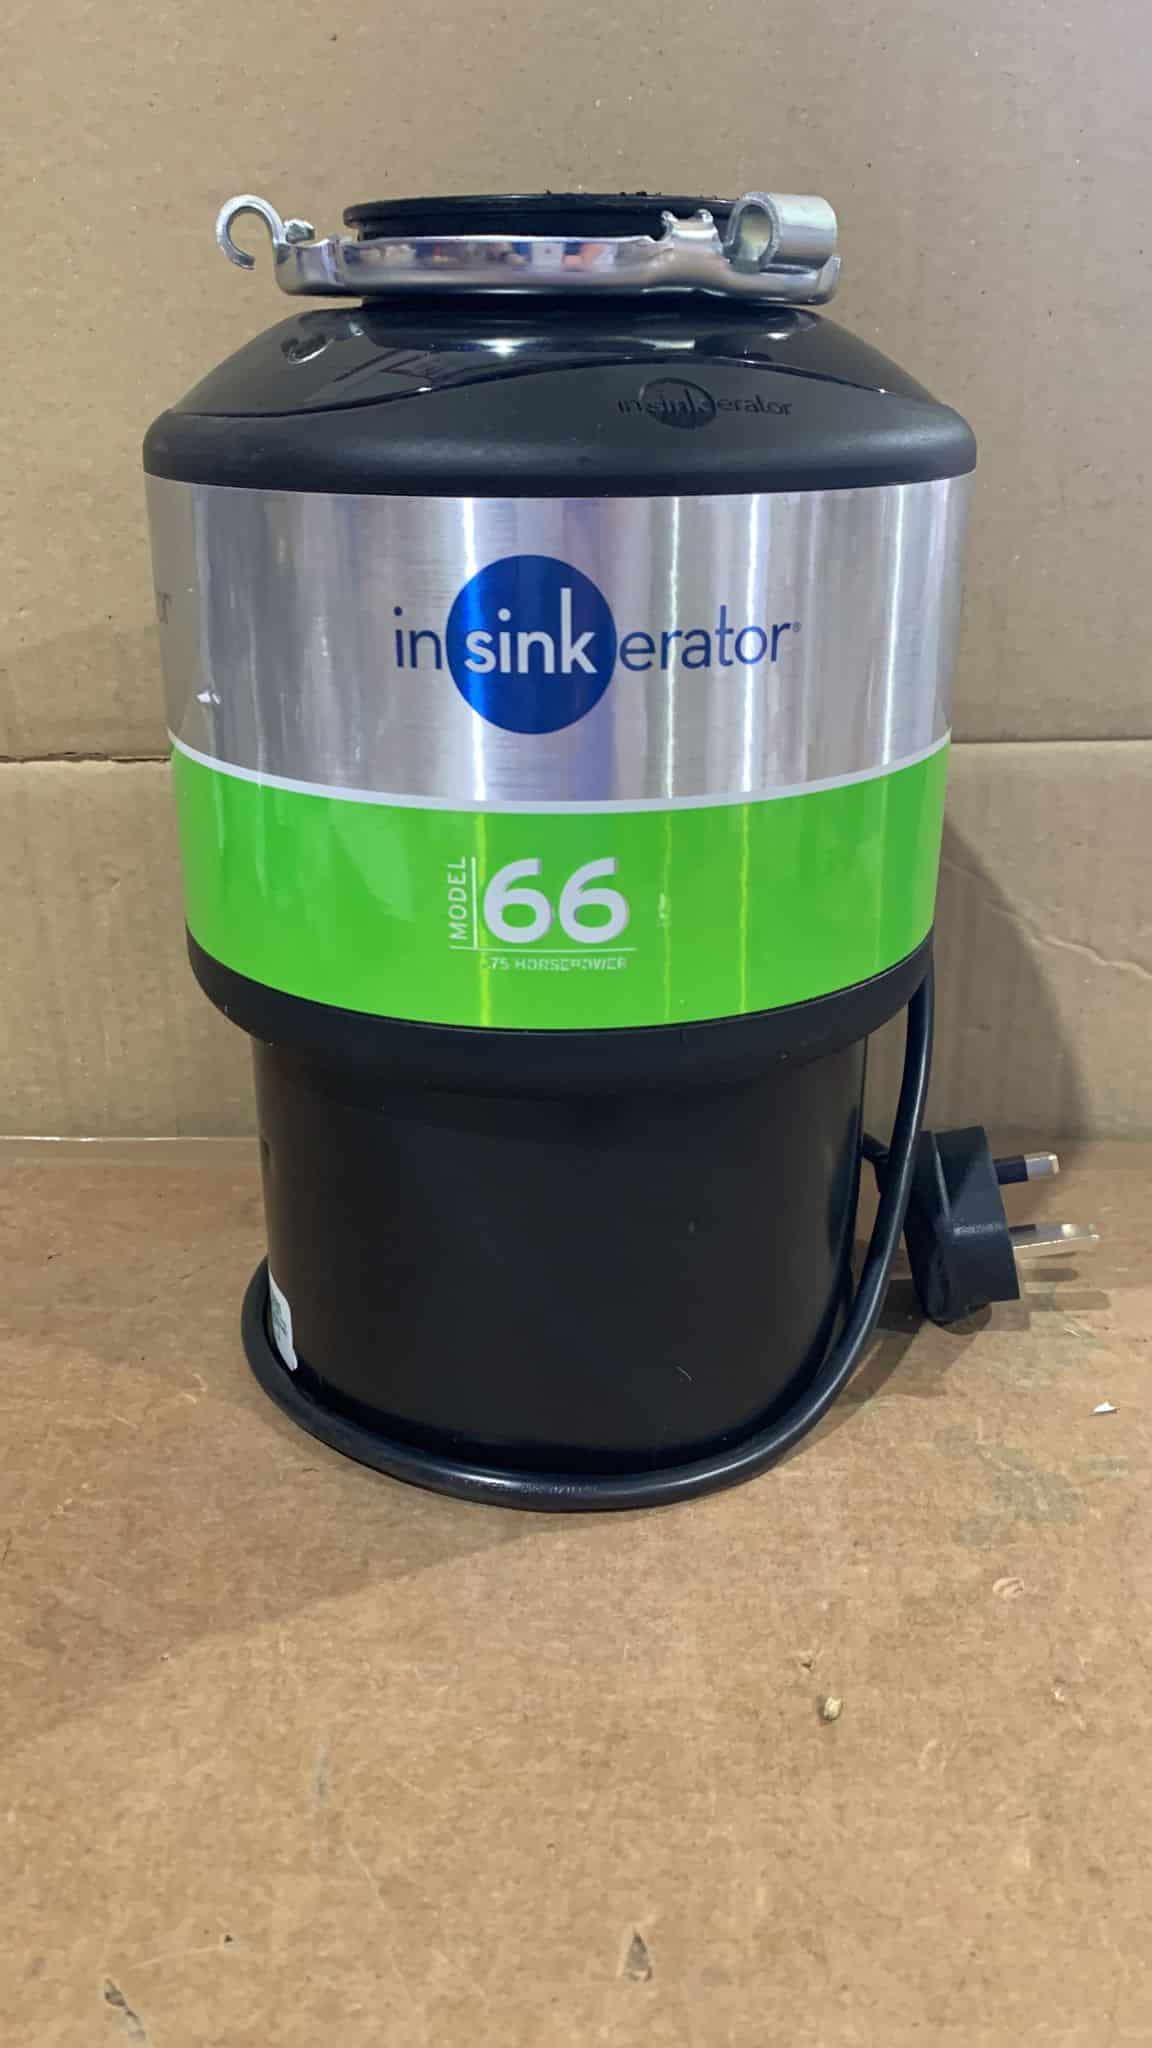 InSinkErator Model 66 Kitchen sink waste disposer 0080